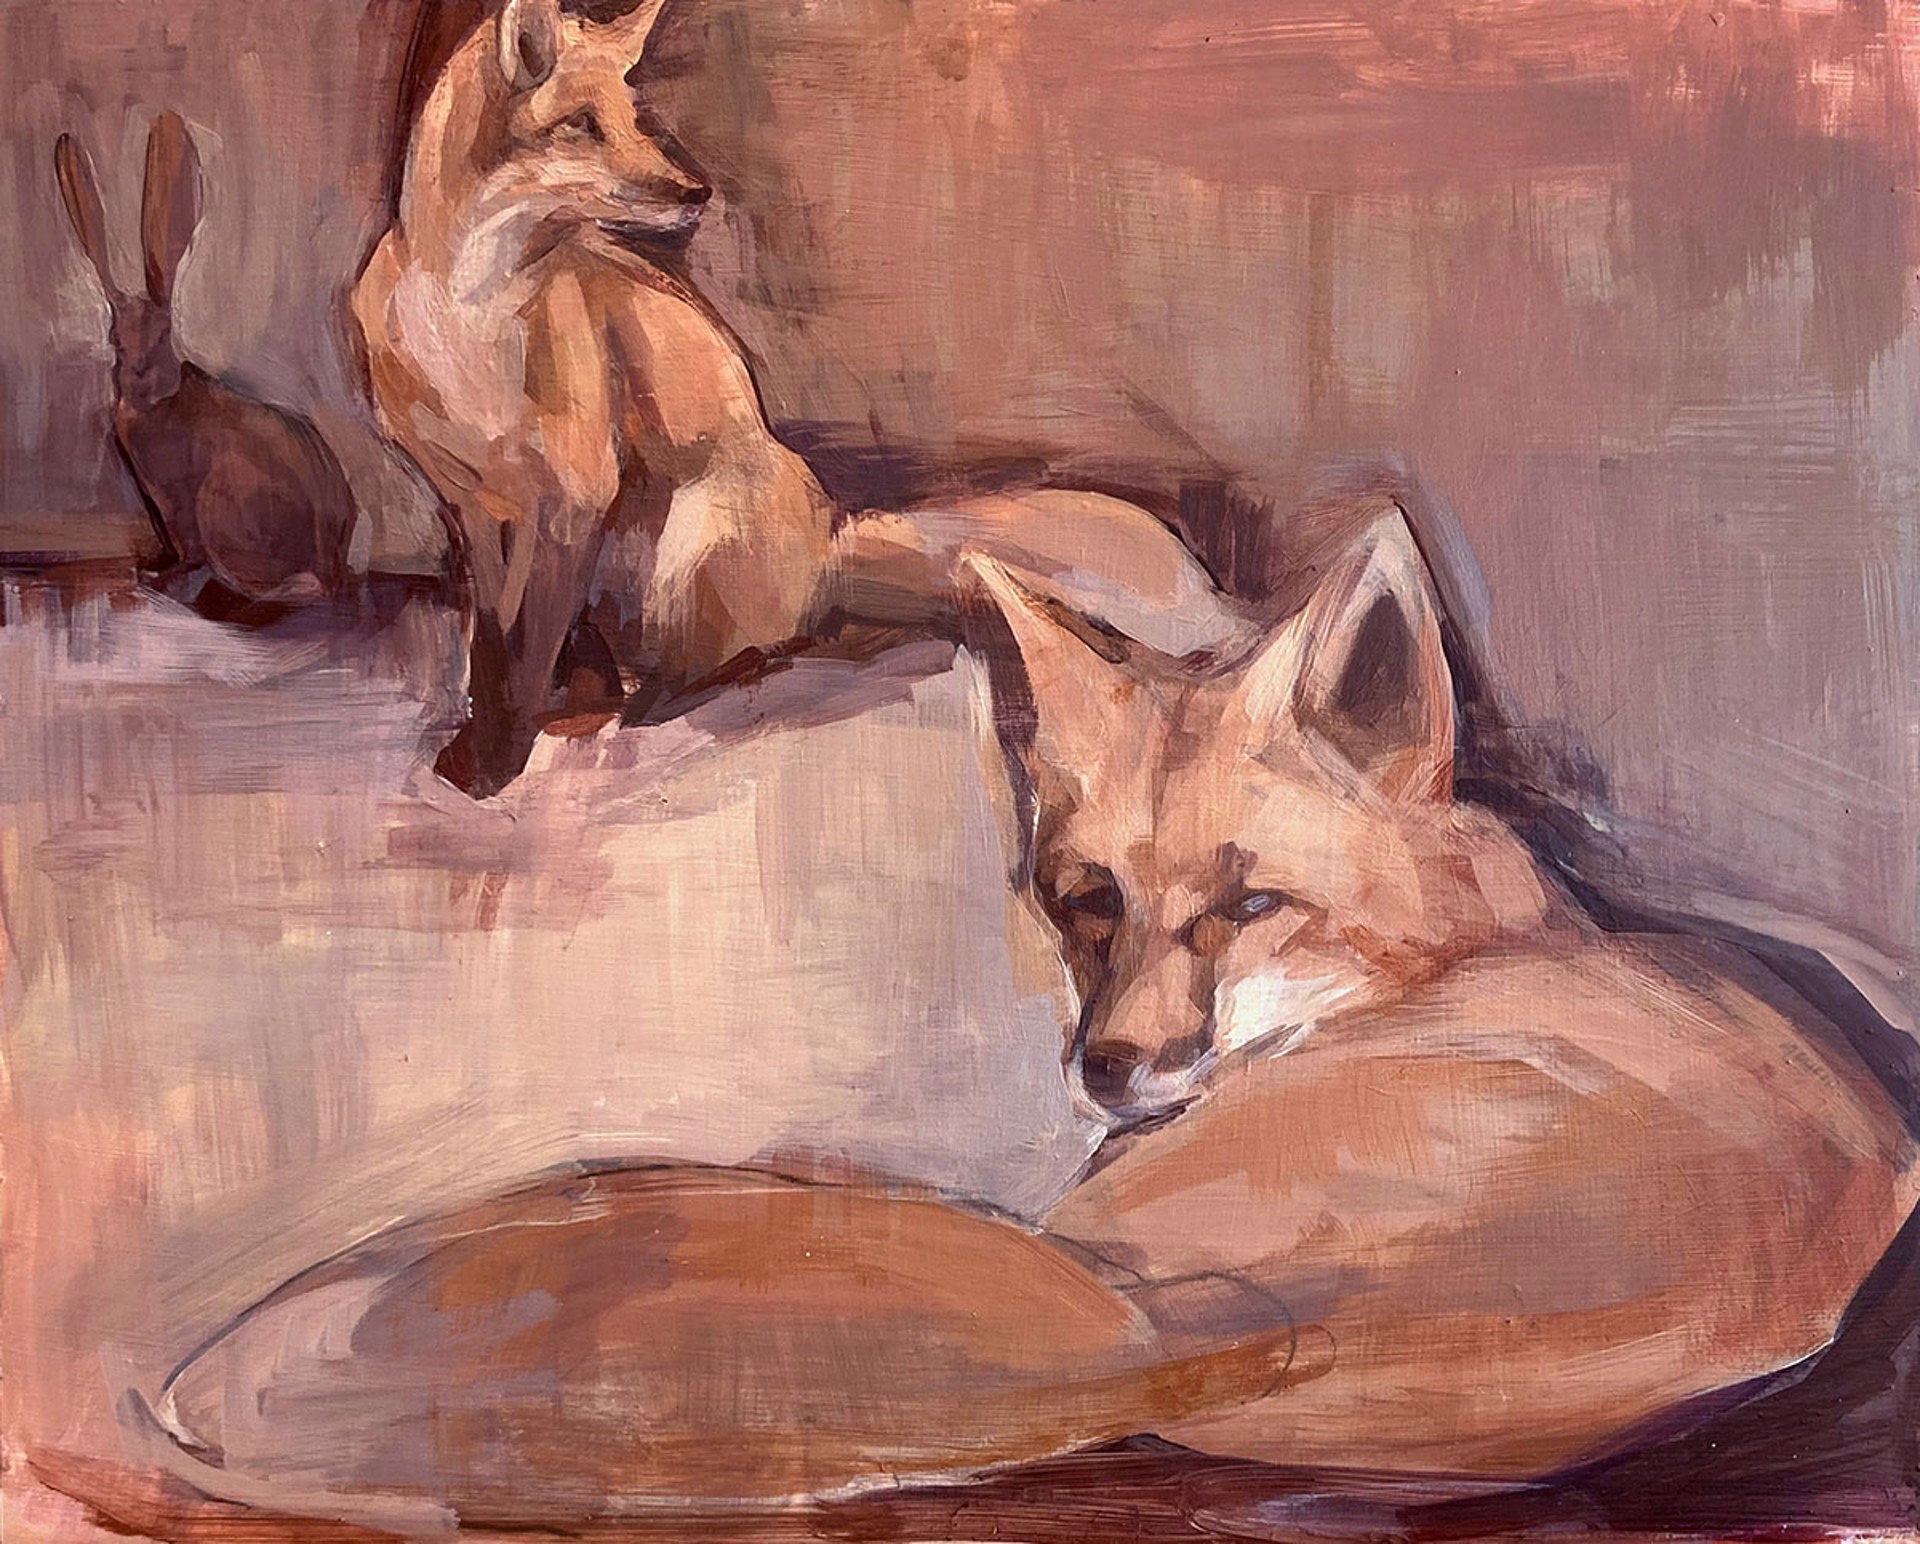 Original Acrylic Painting By Taryn Boals Featuring A Sleeping Fox In Warm Neutrals